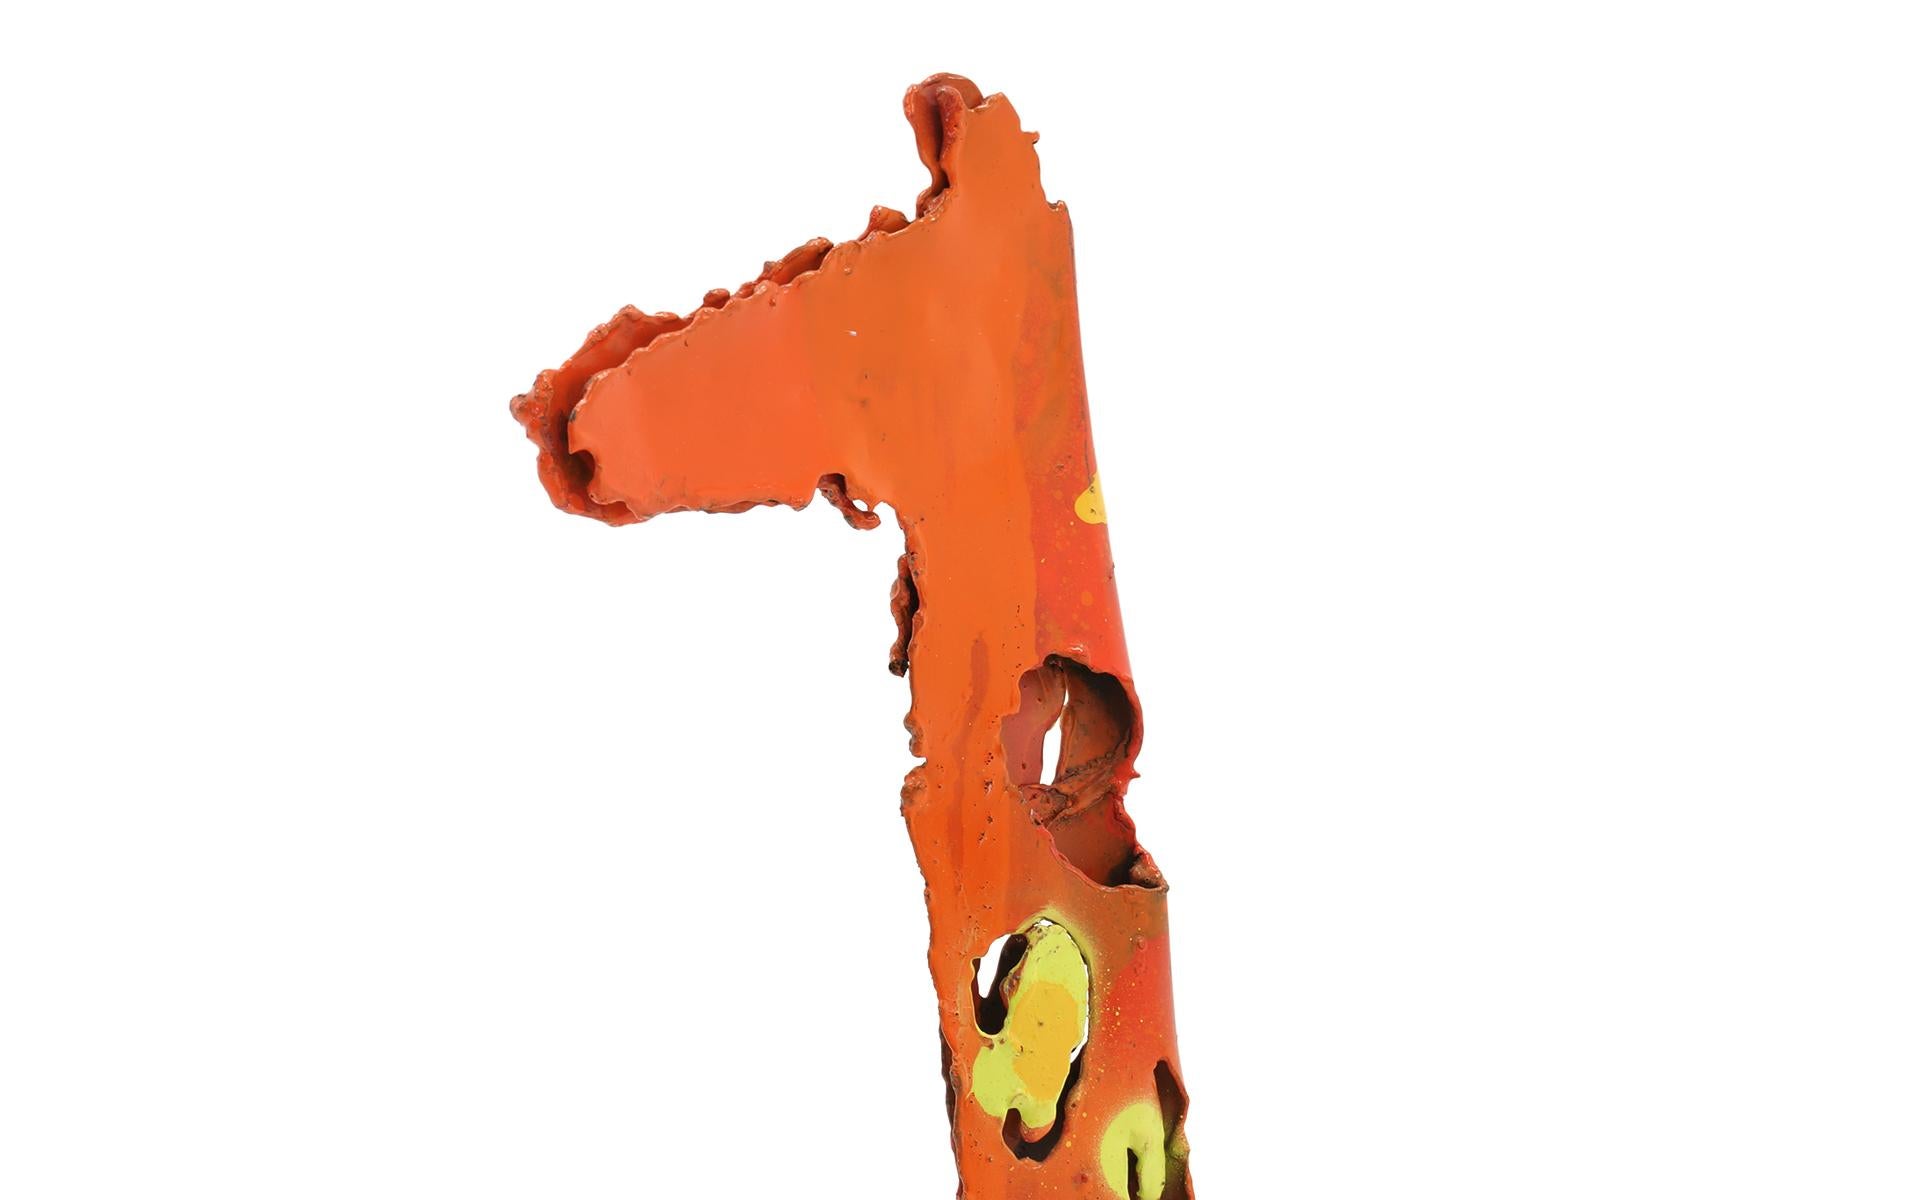 American James Bearden Table Top Girafe Sculpture, Orange and Yellow Enamaled Steel